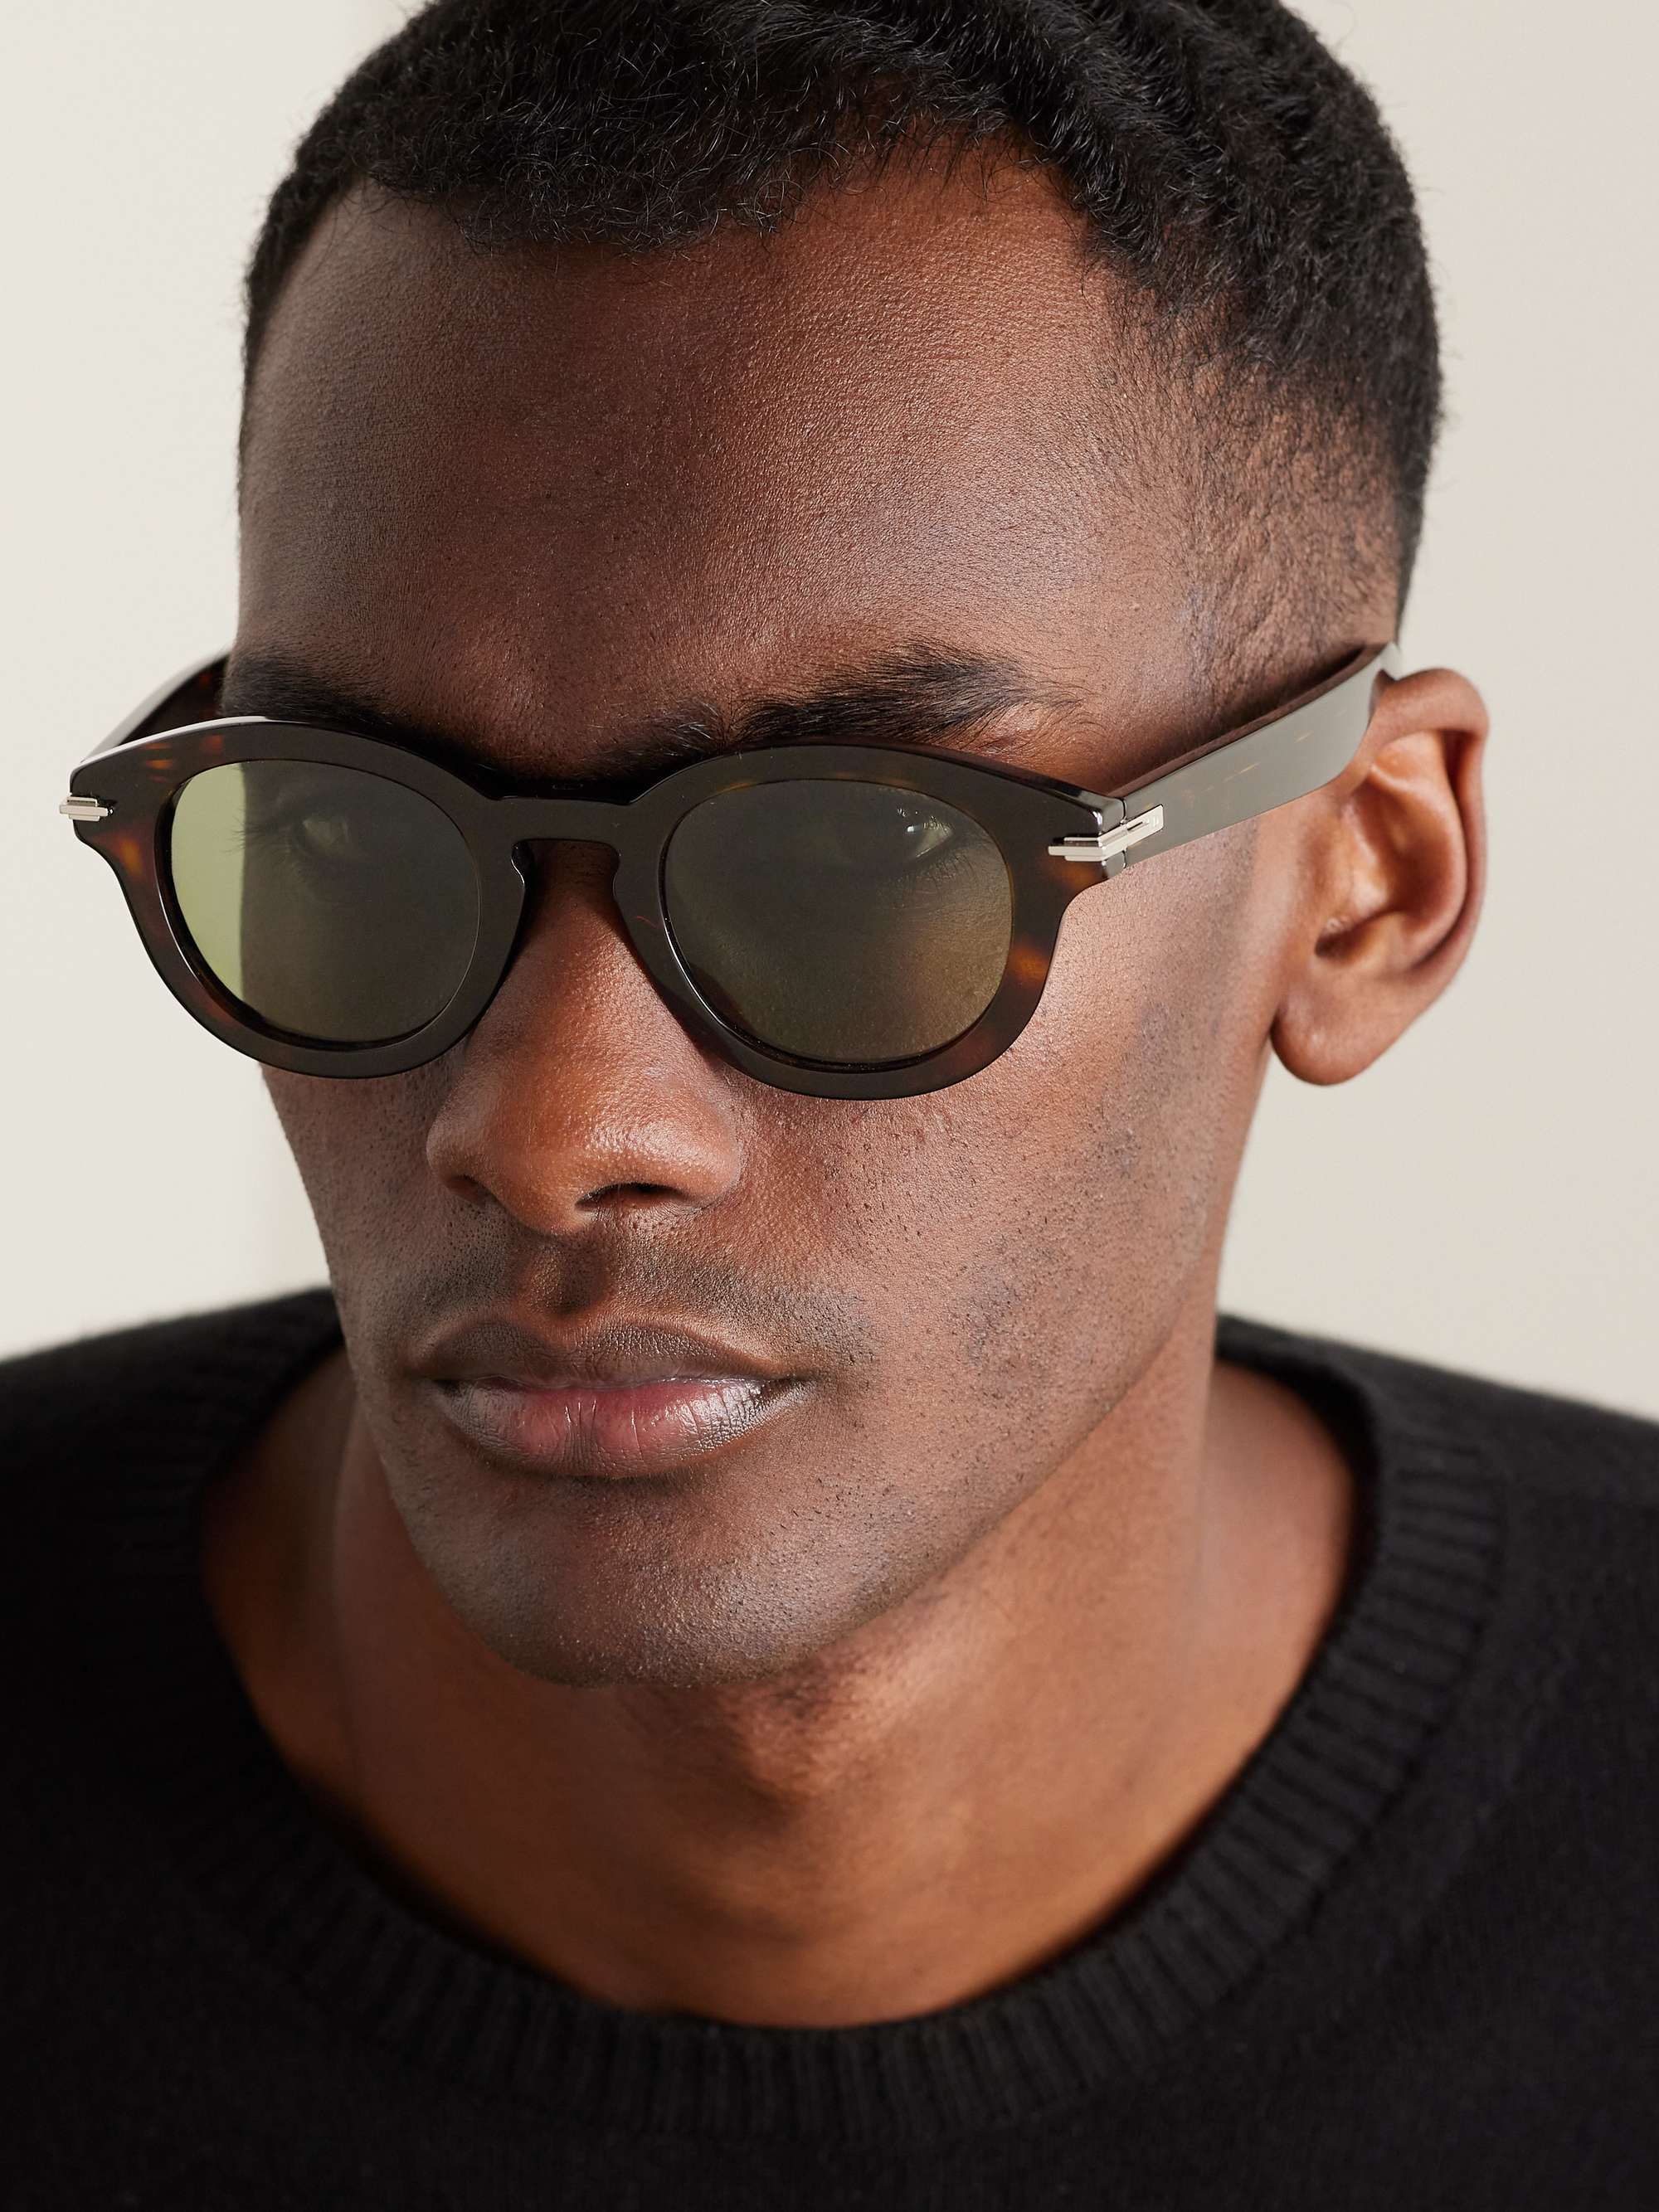 DIOR EYEWEAR DiorBlackSuit R5I Round-Frame Acetate Sunglasses for Men ...